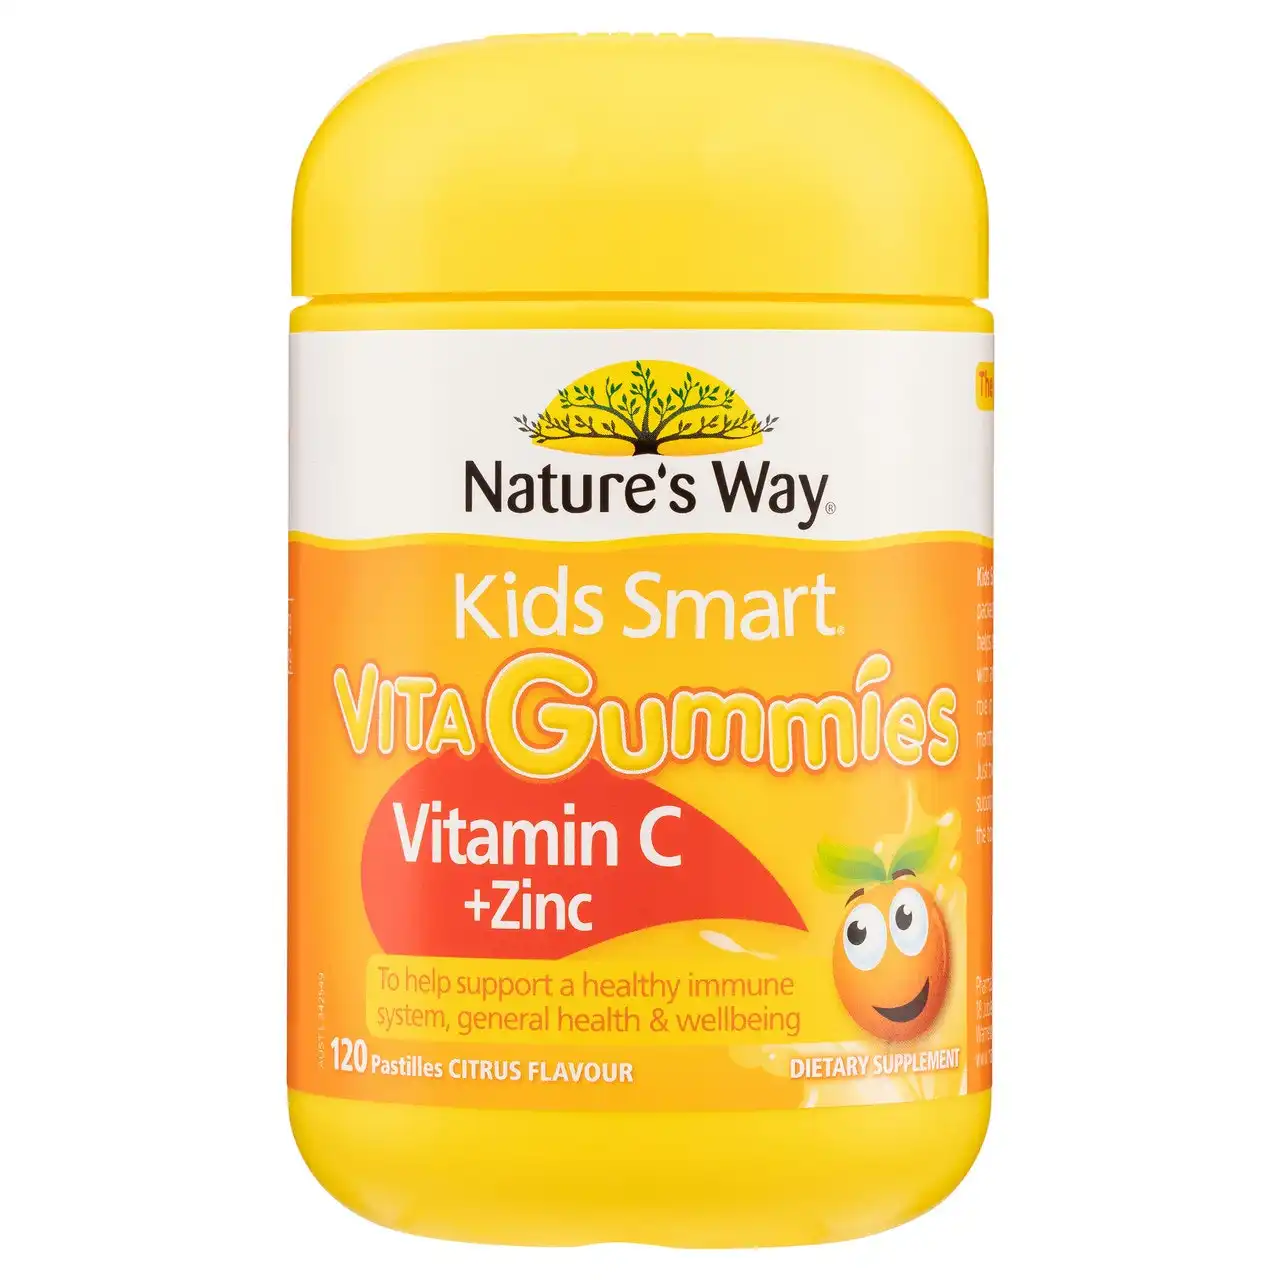 Nature's Way Kids Smart Vita Gummies Vitamin C + Zinc 120's